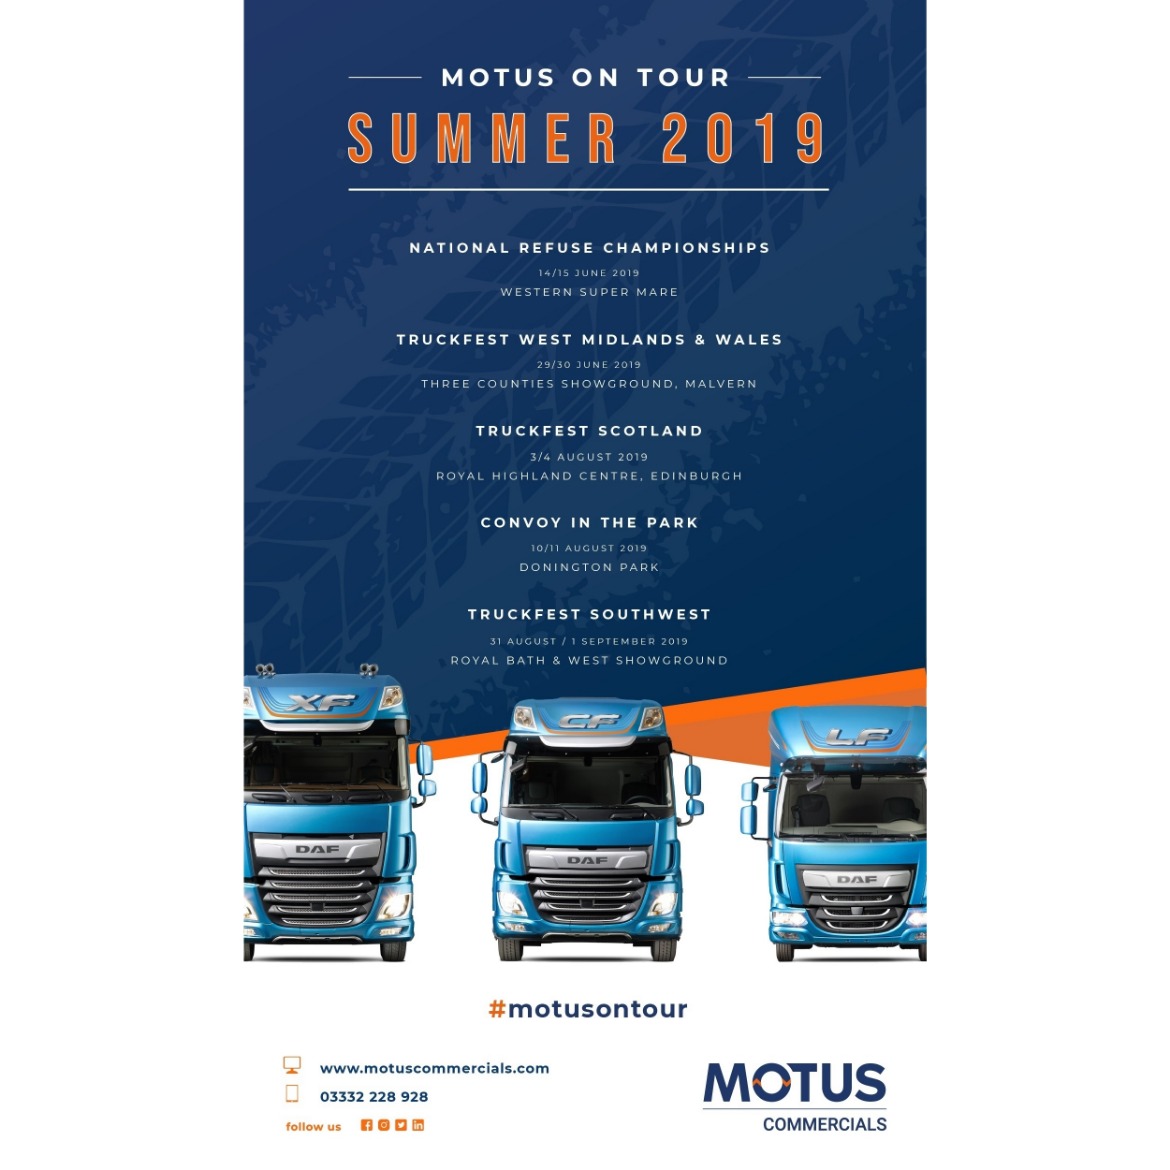 Motus on Tour Summer 2019 dates